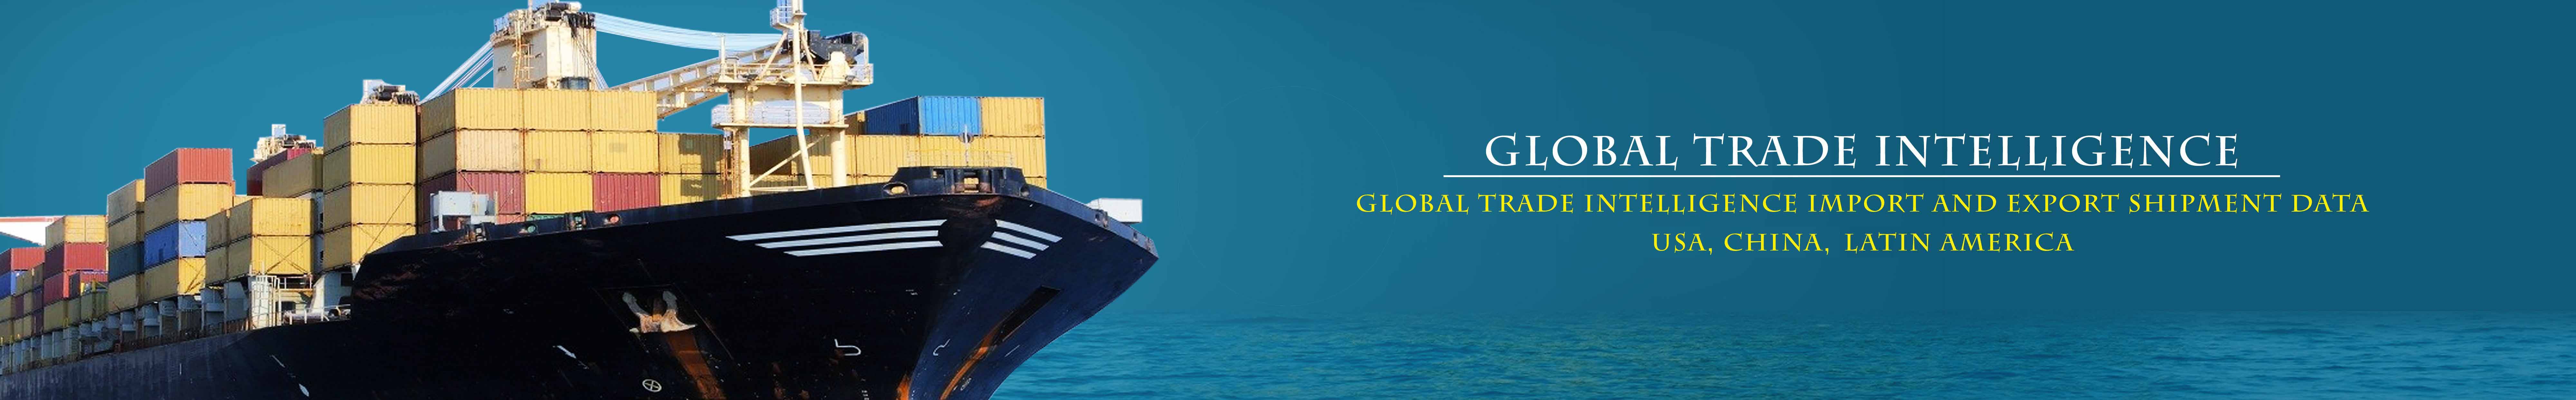 India Import World banner1